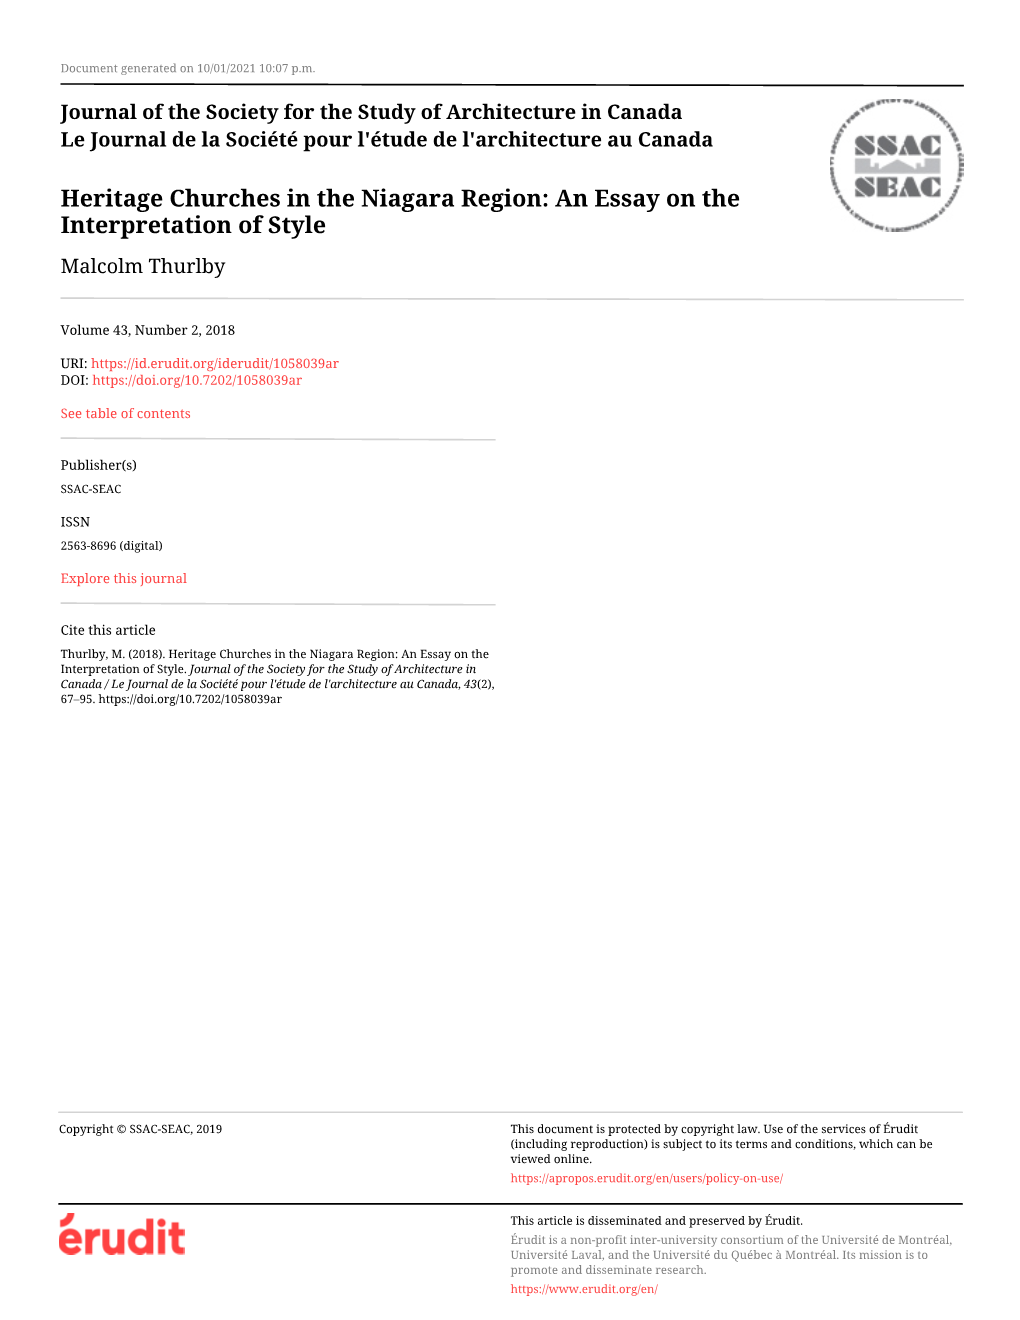 Heritage Churches in the Niagara Region: an Essay on the Interpretation of Style Malcolm Thurlby